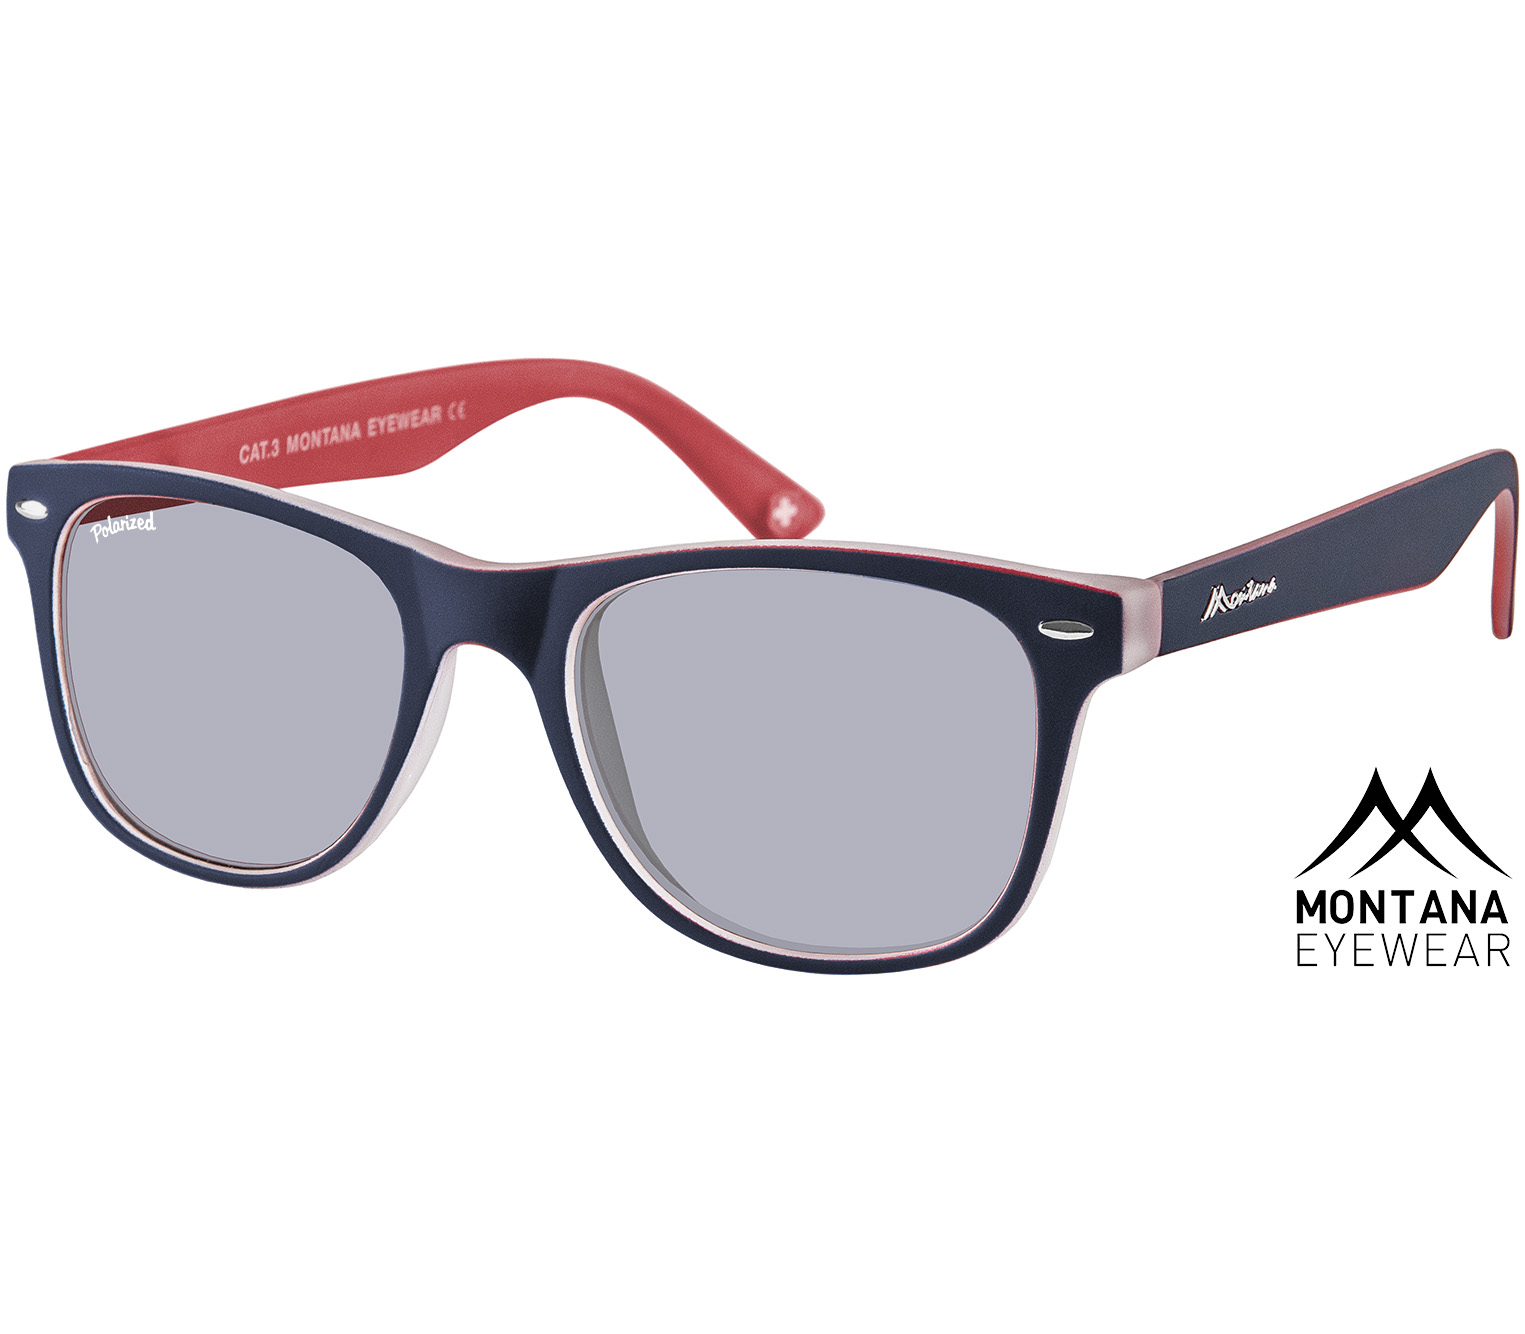 Main Image (Angle) - Oasis (Red) Sunglasses